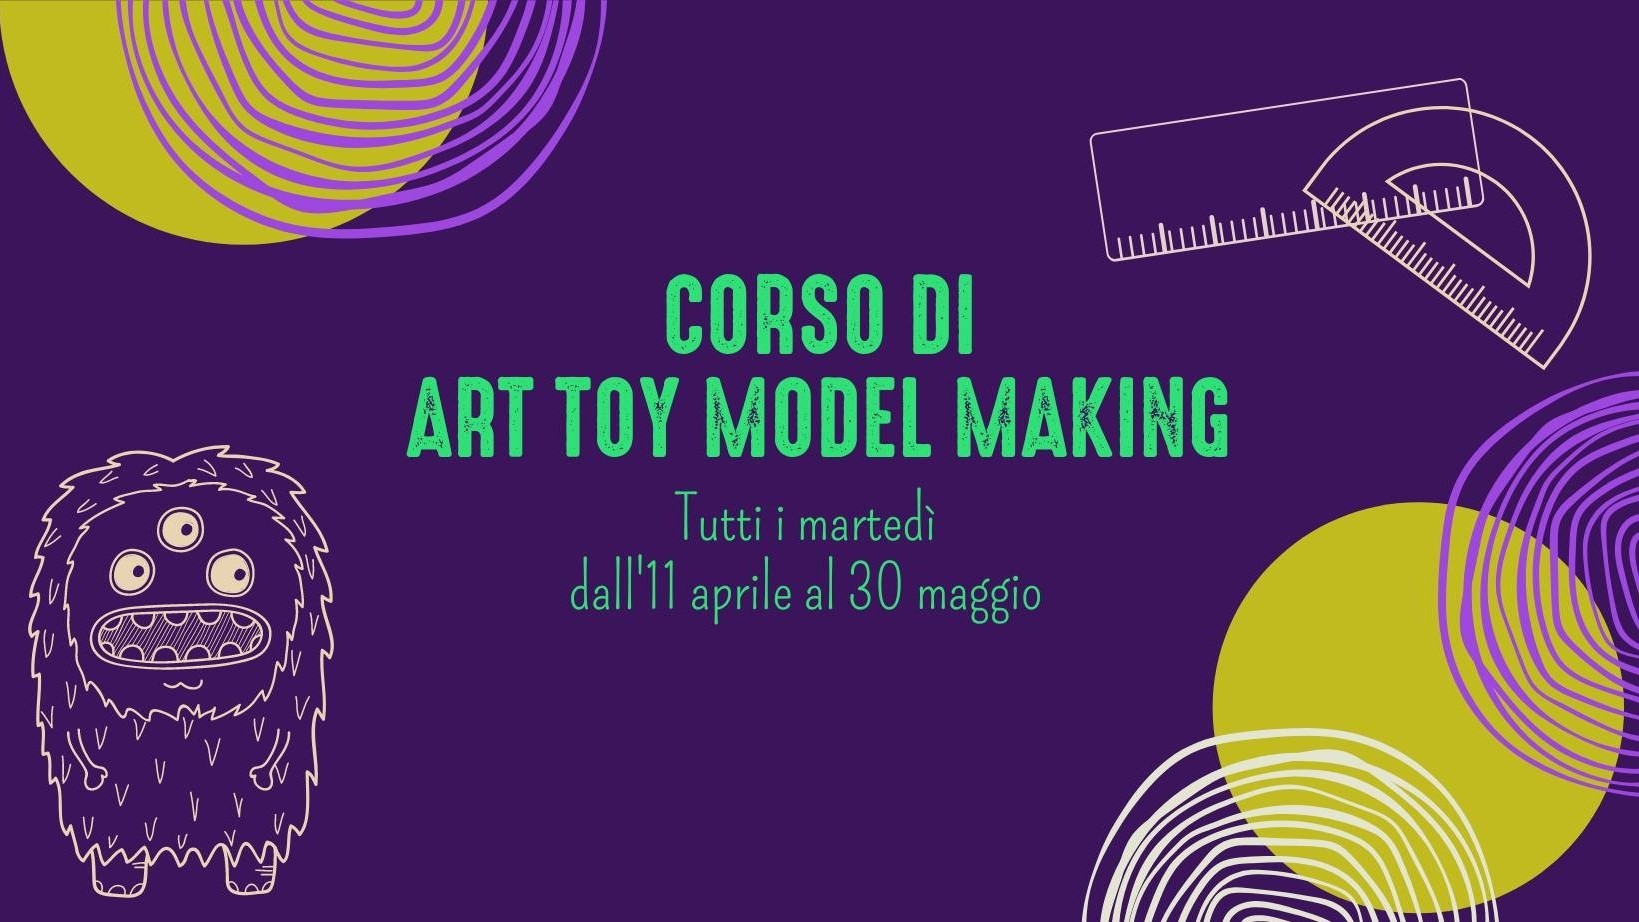 Corso di Art toy model making